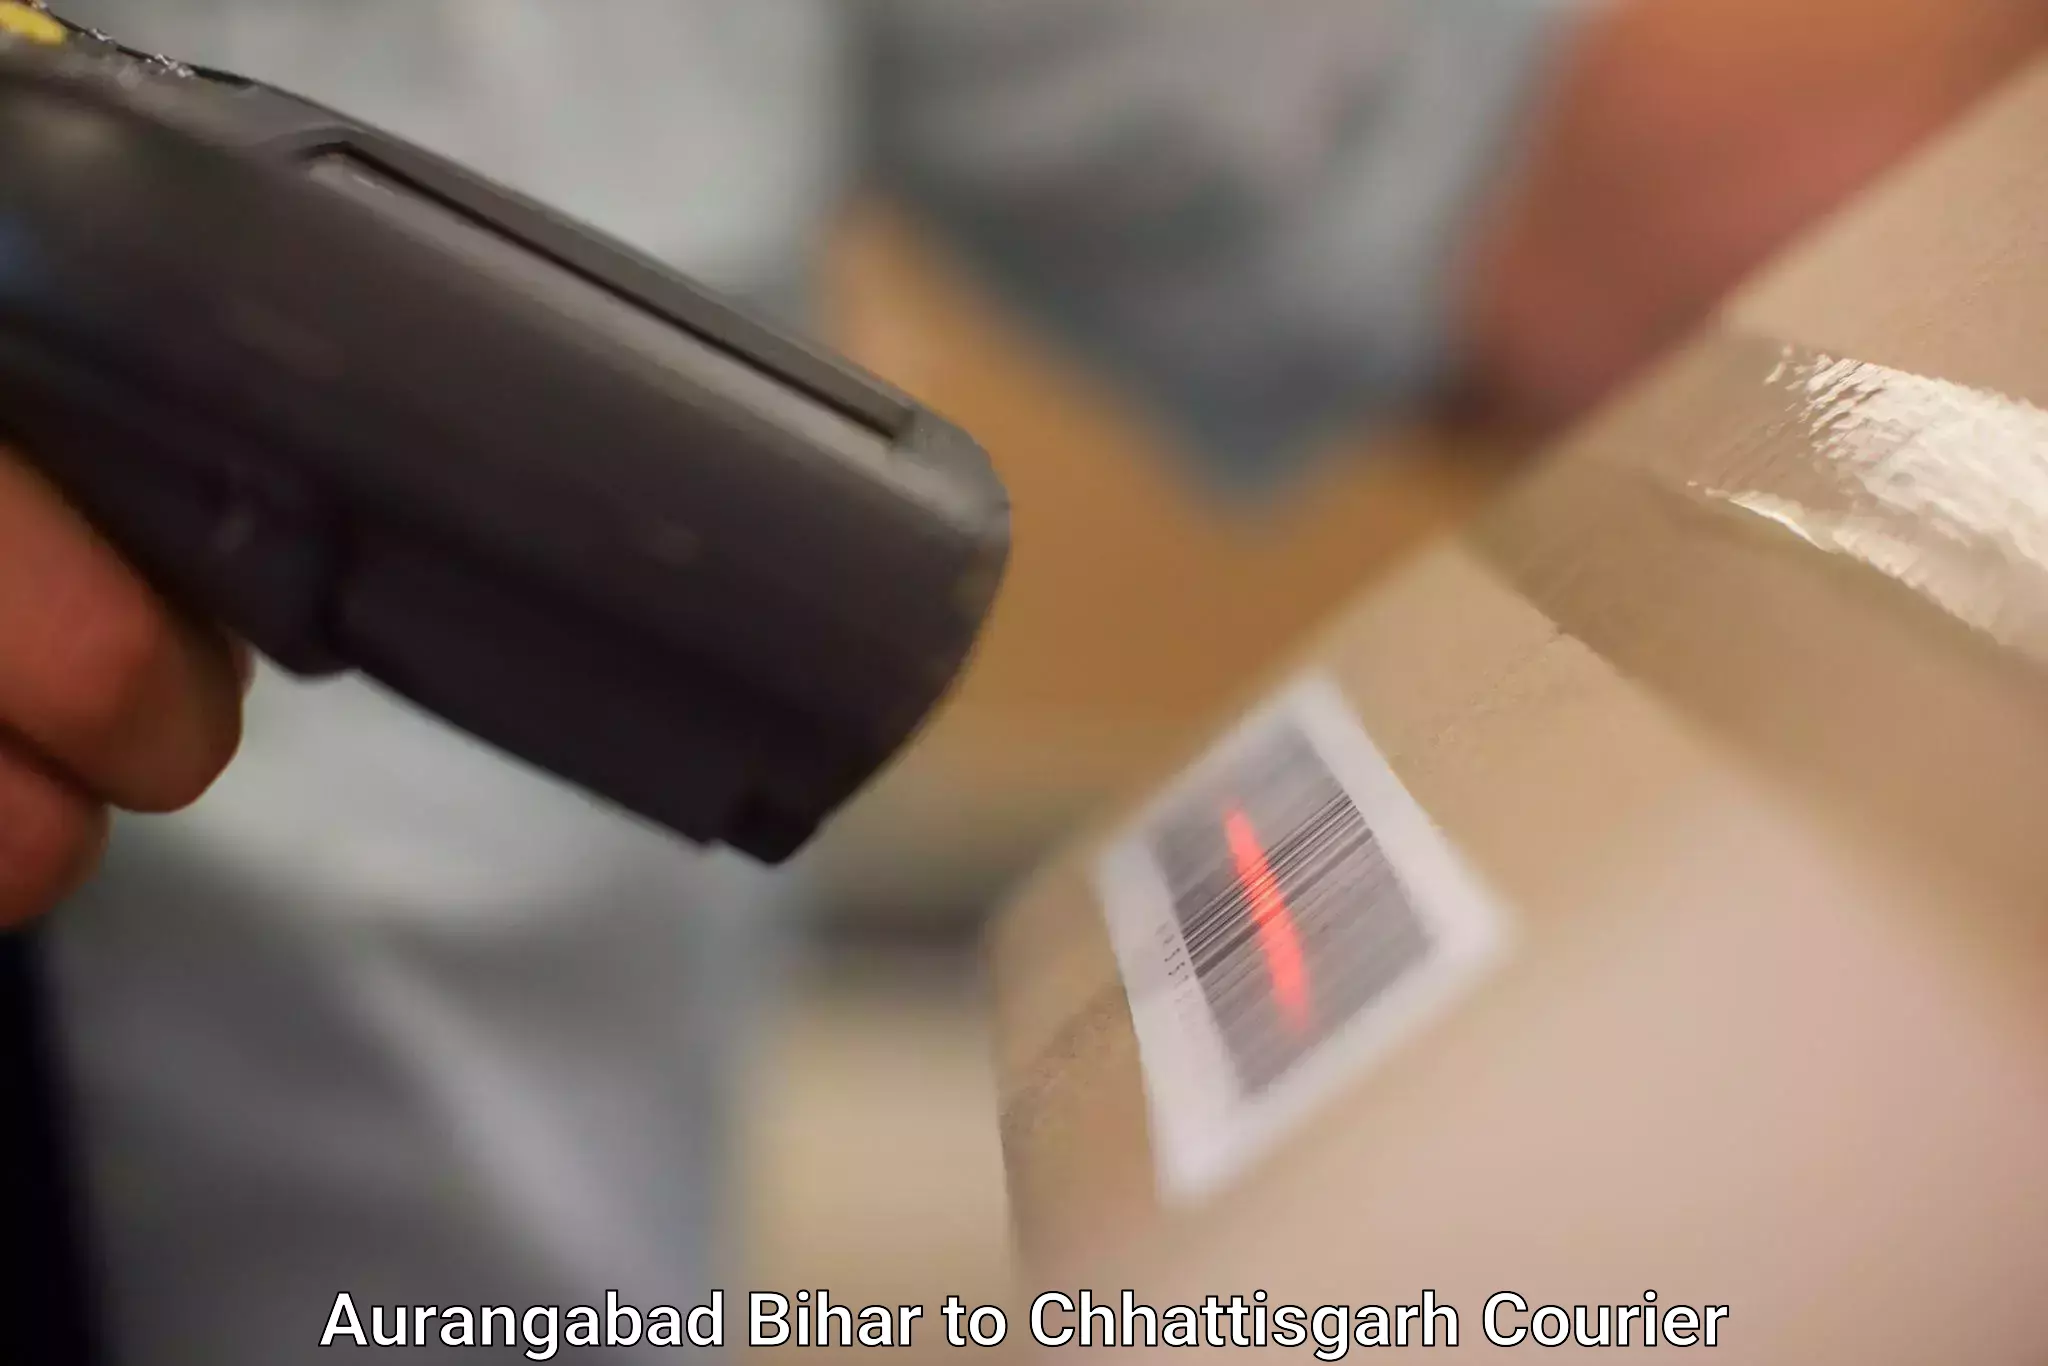 Courier service comparison Aurangabad Bihar to Abhanpur